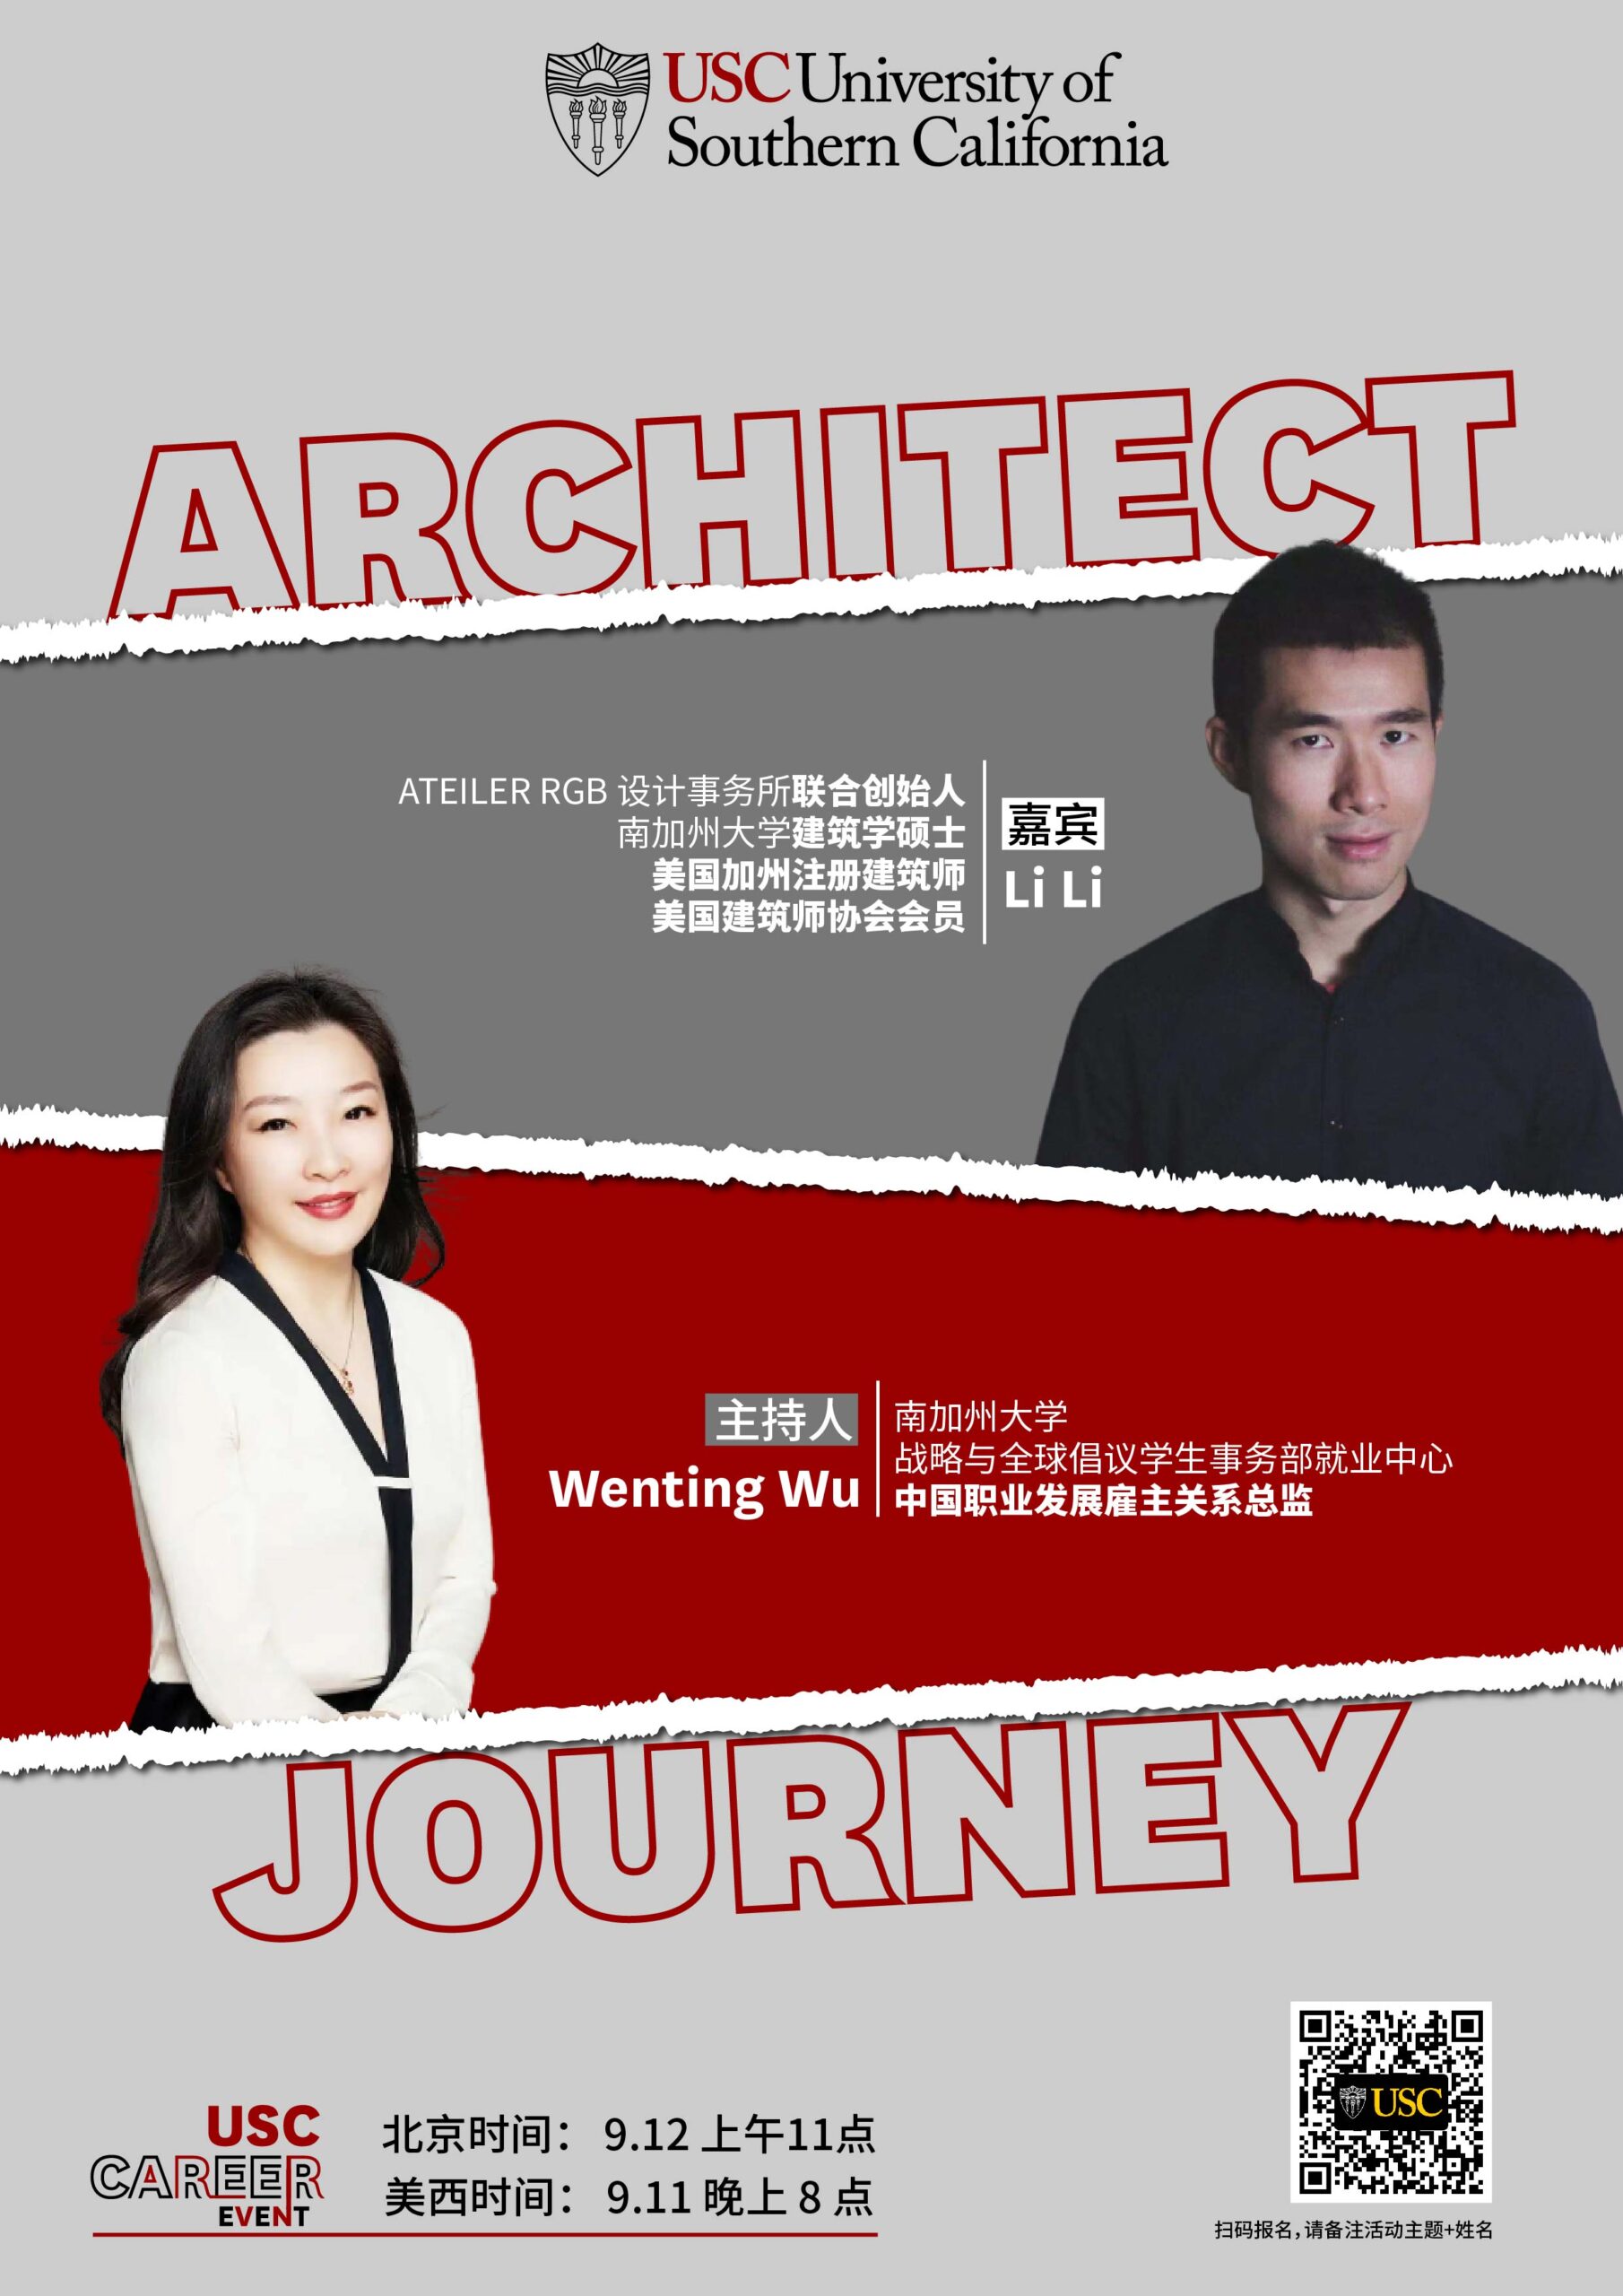 USC Career Event - Architect Journey